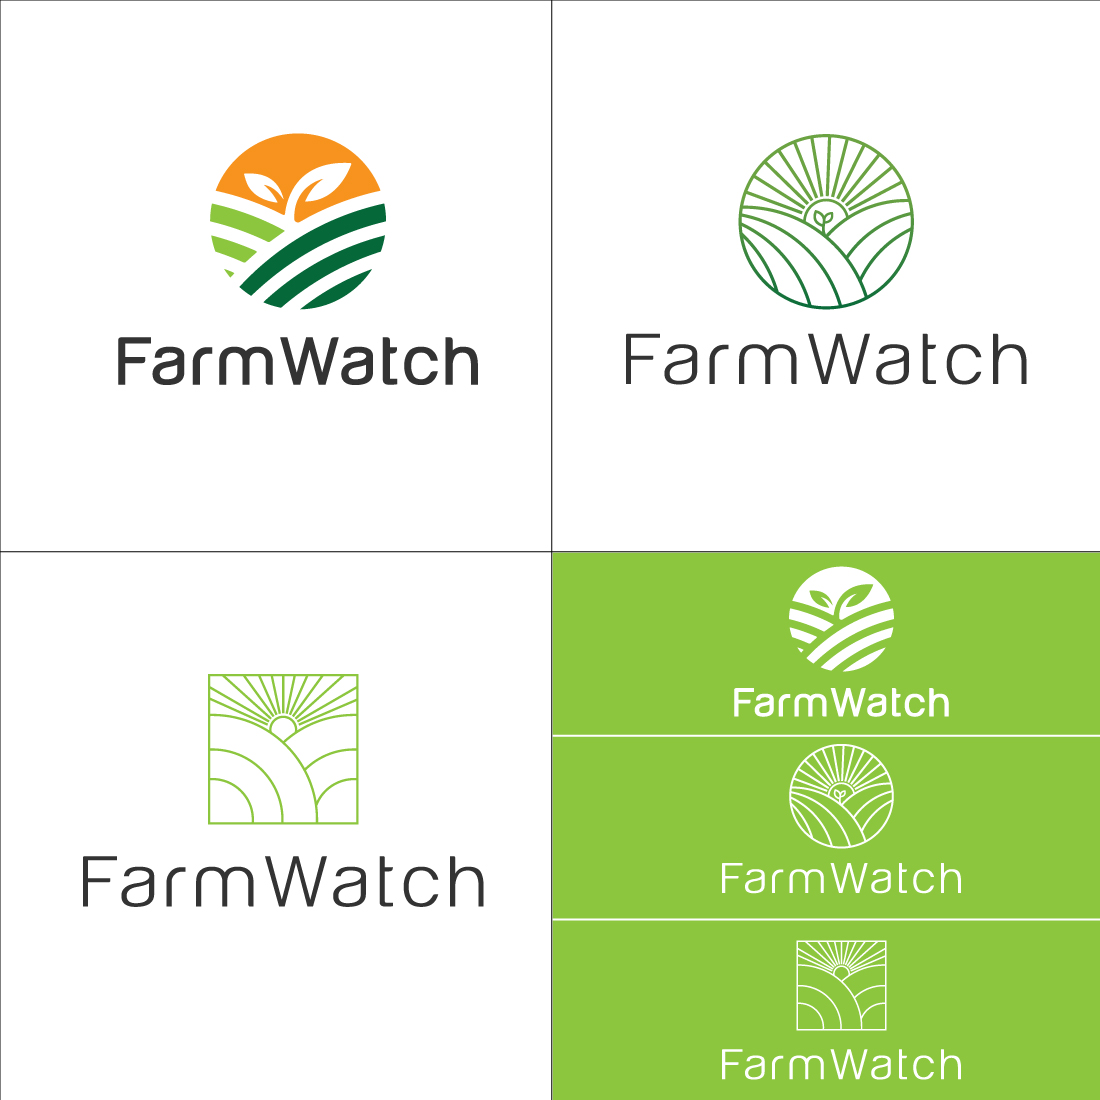 3 Farm Logos Design cover image.